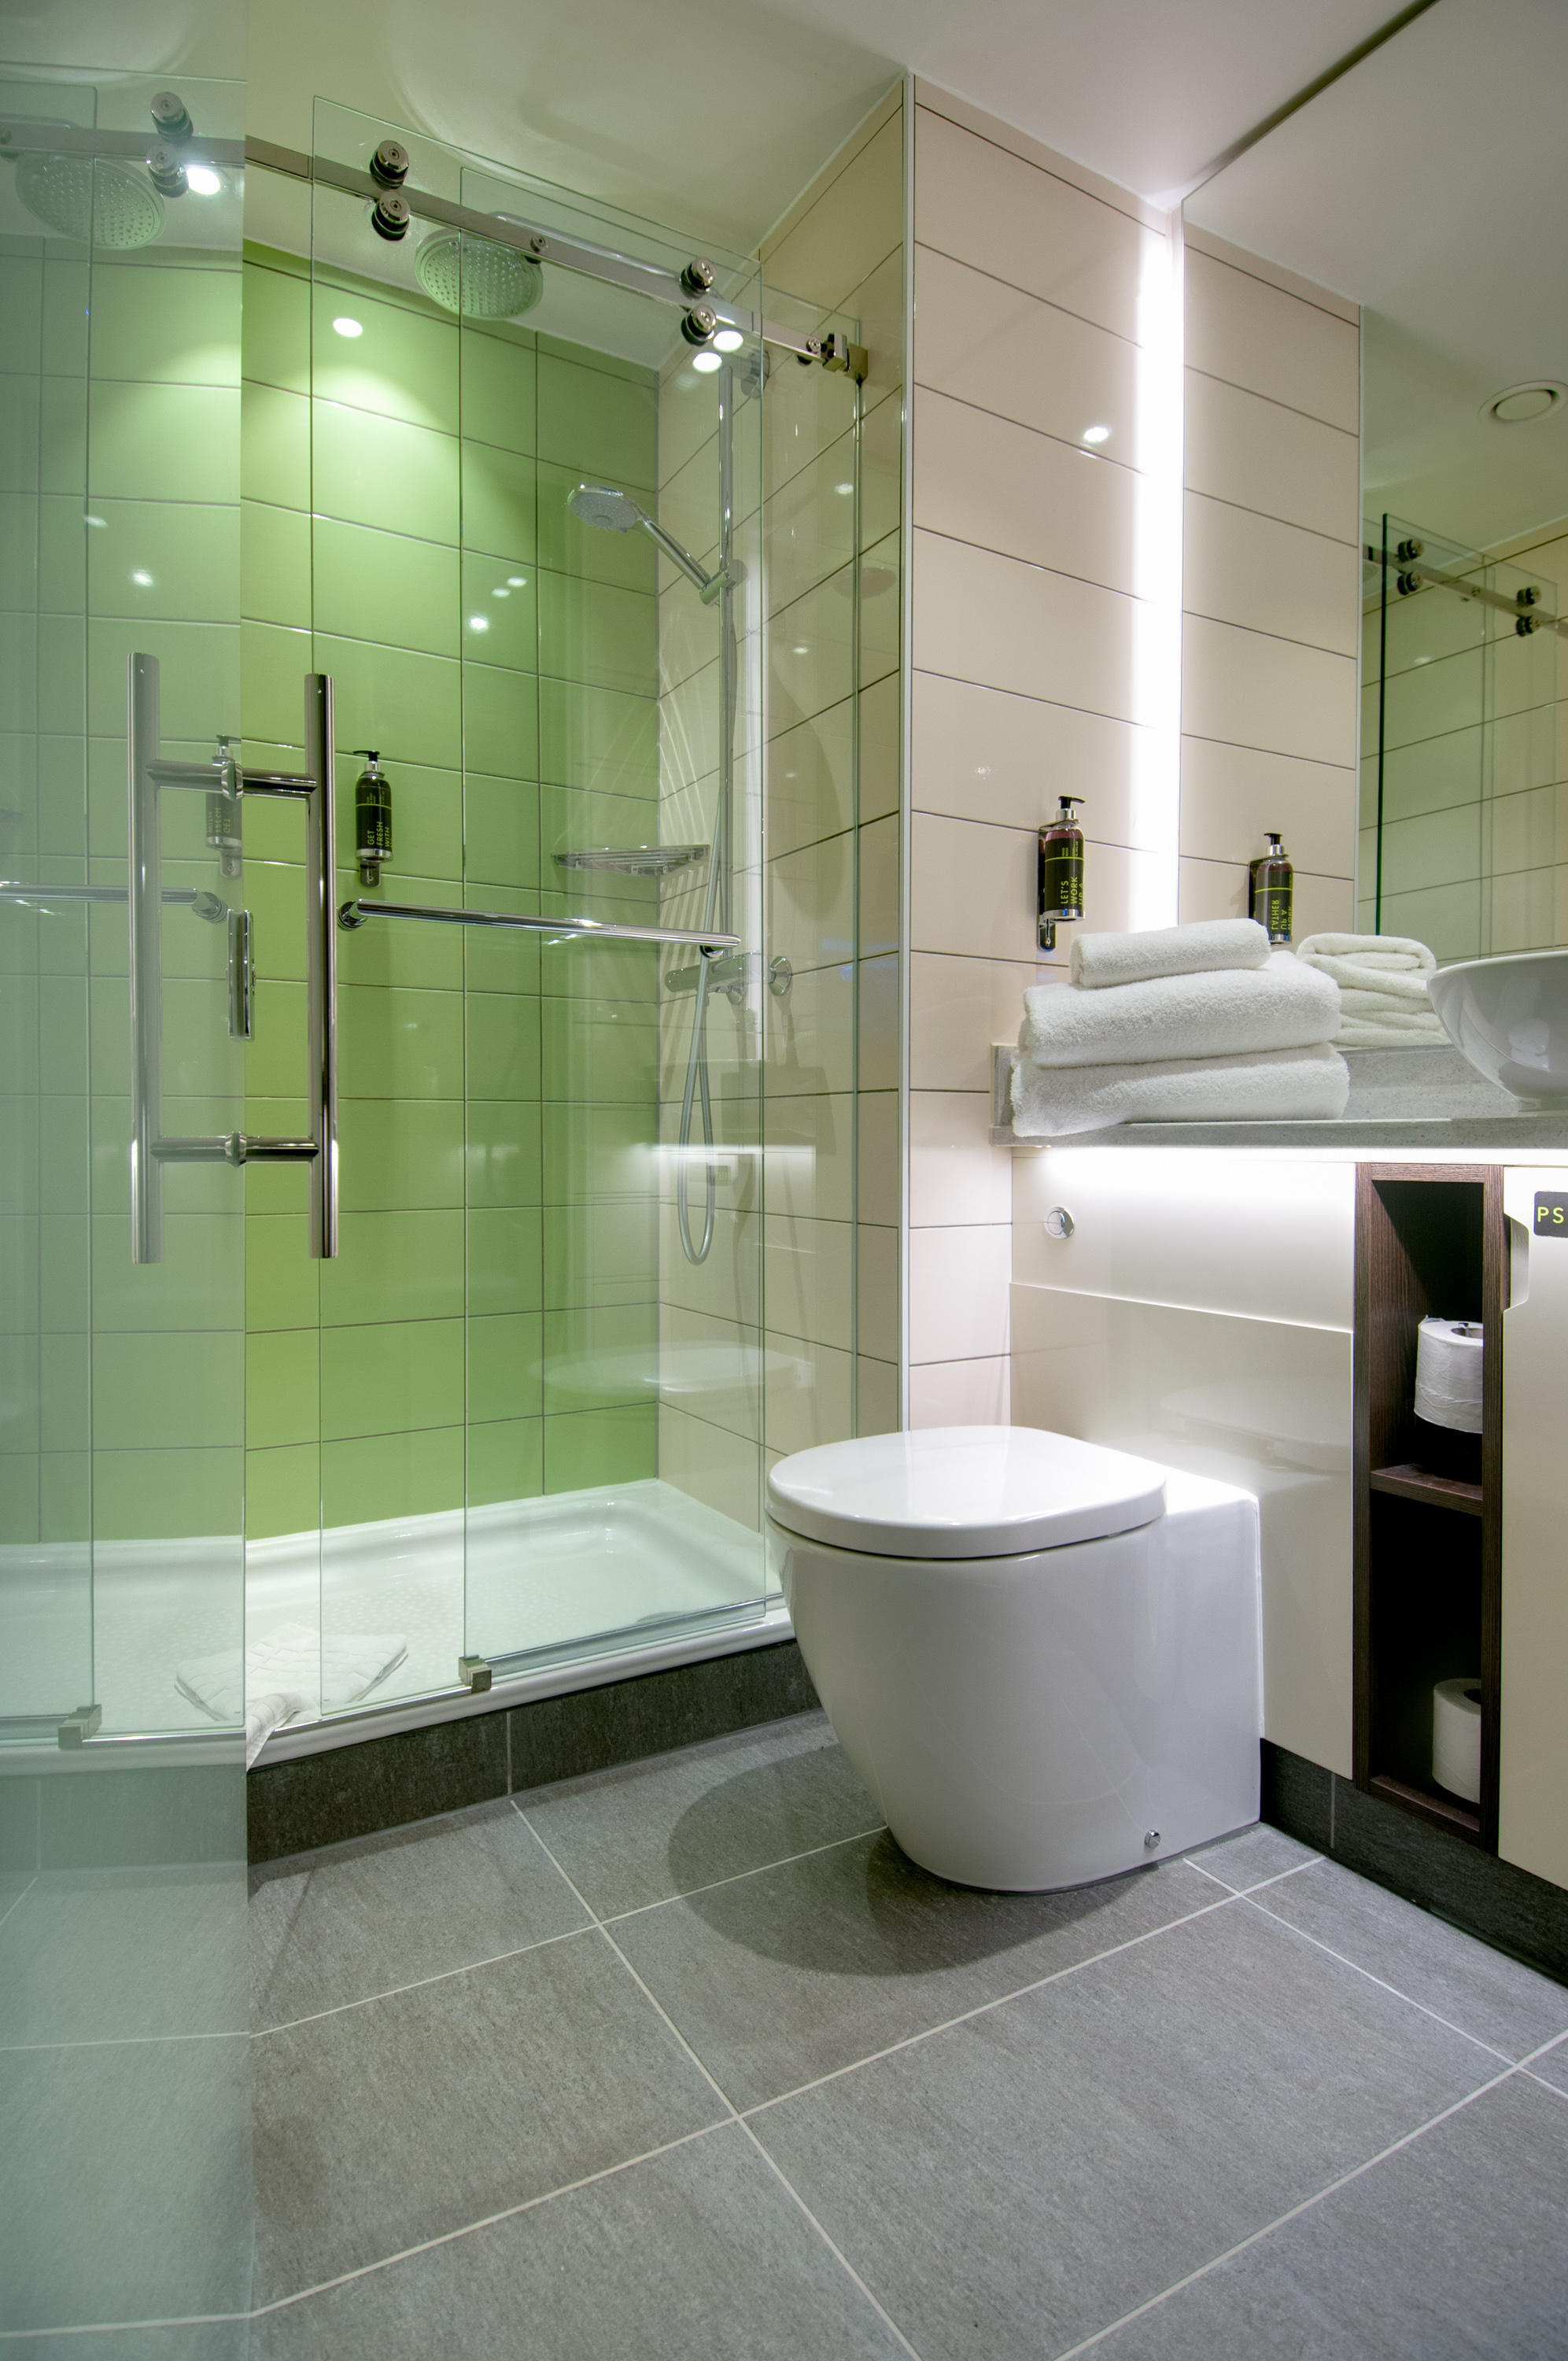 hub by Premier Inn bathroom hub by Premier Inn London Covent Garden hotel London 03333 213104